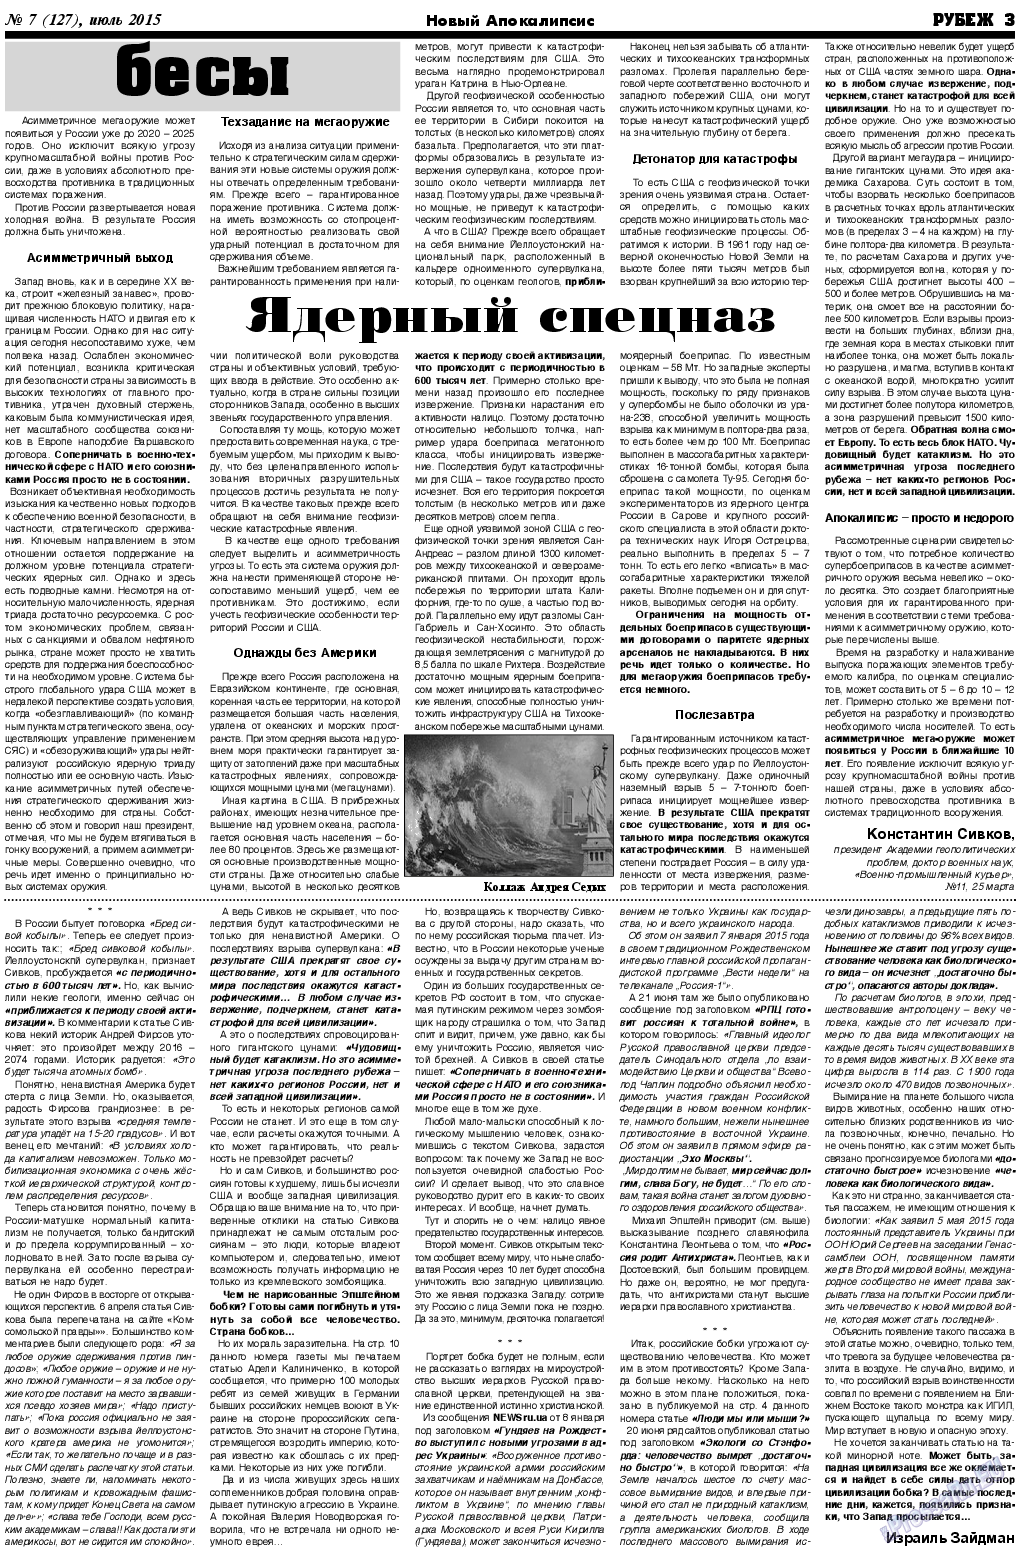 Рубеж, газета. 2015 №7 стр.3